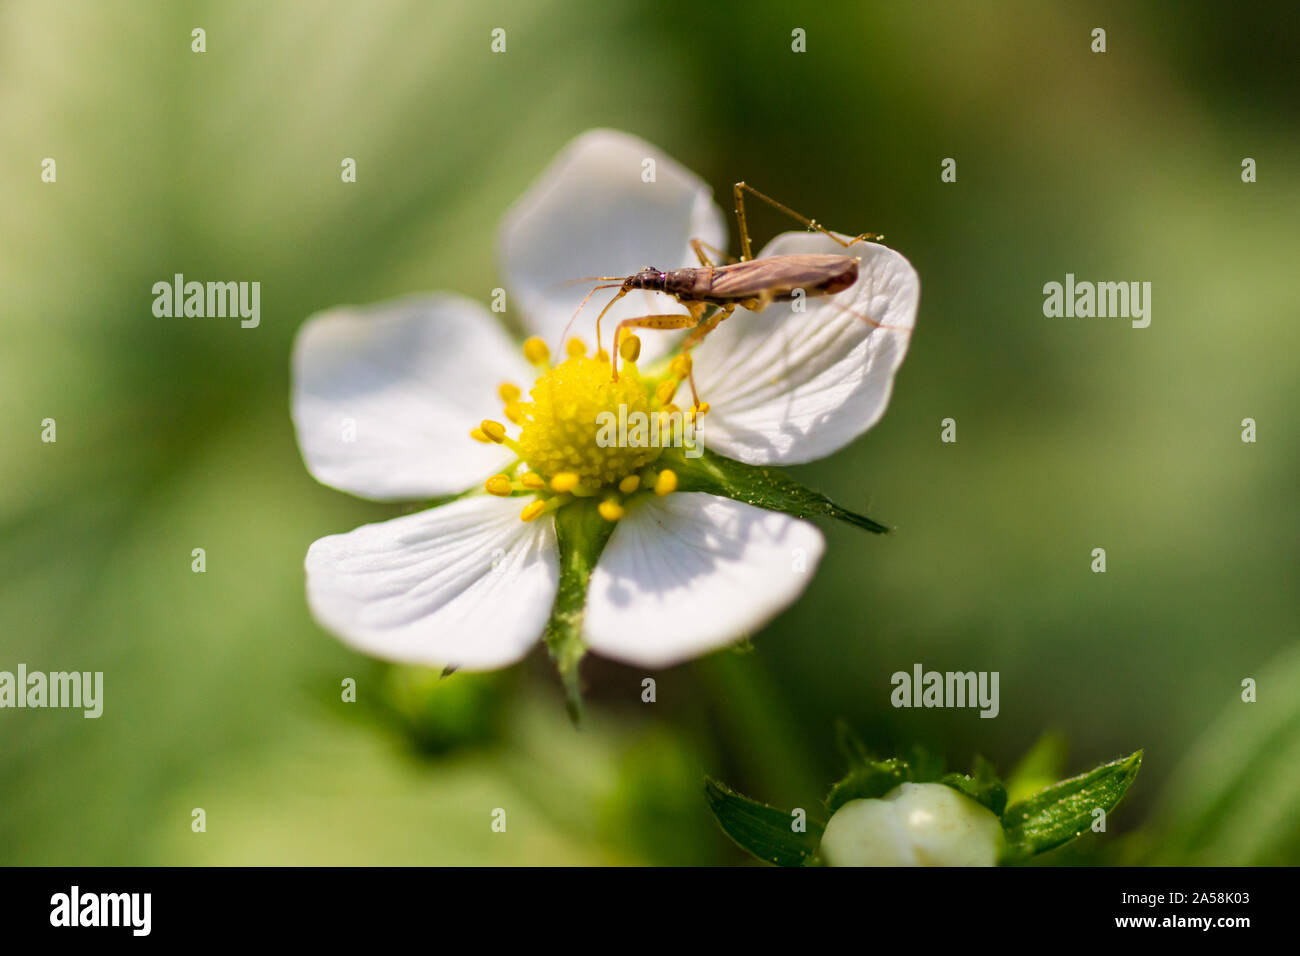 Damsel bug Nabis rugosus feeding on white virginia strawberry flower in spring Stock Photo